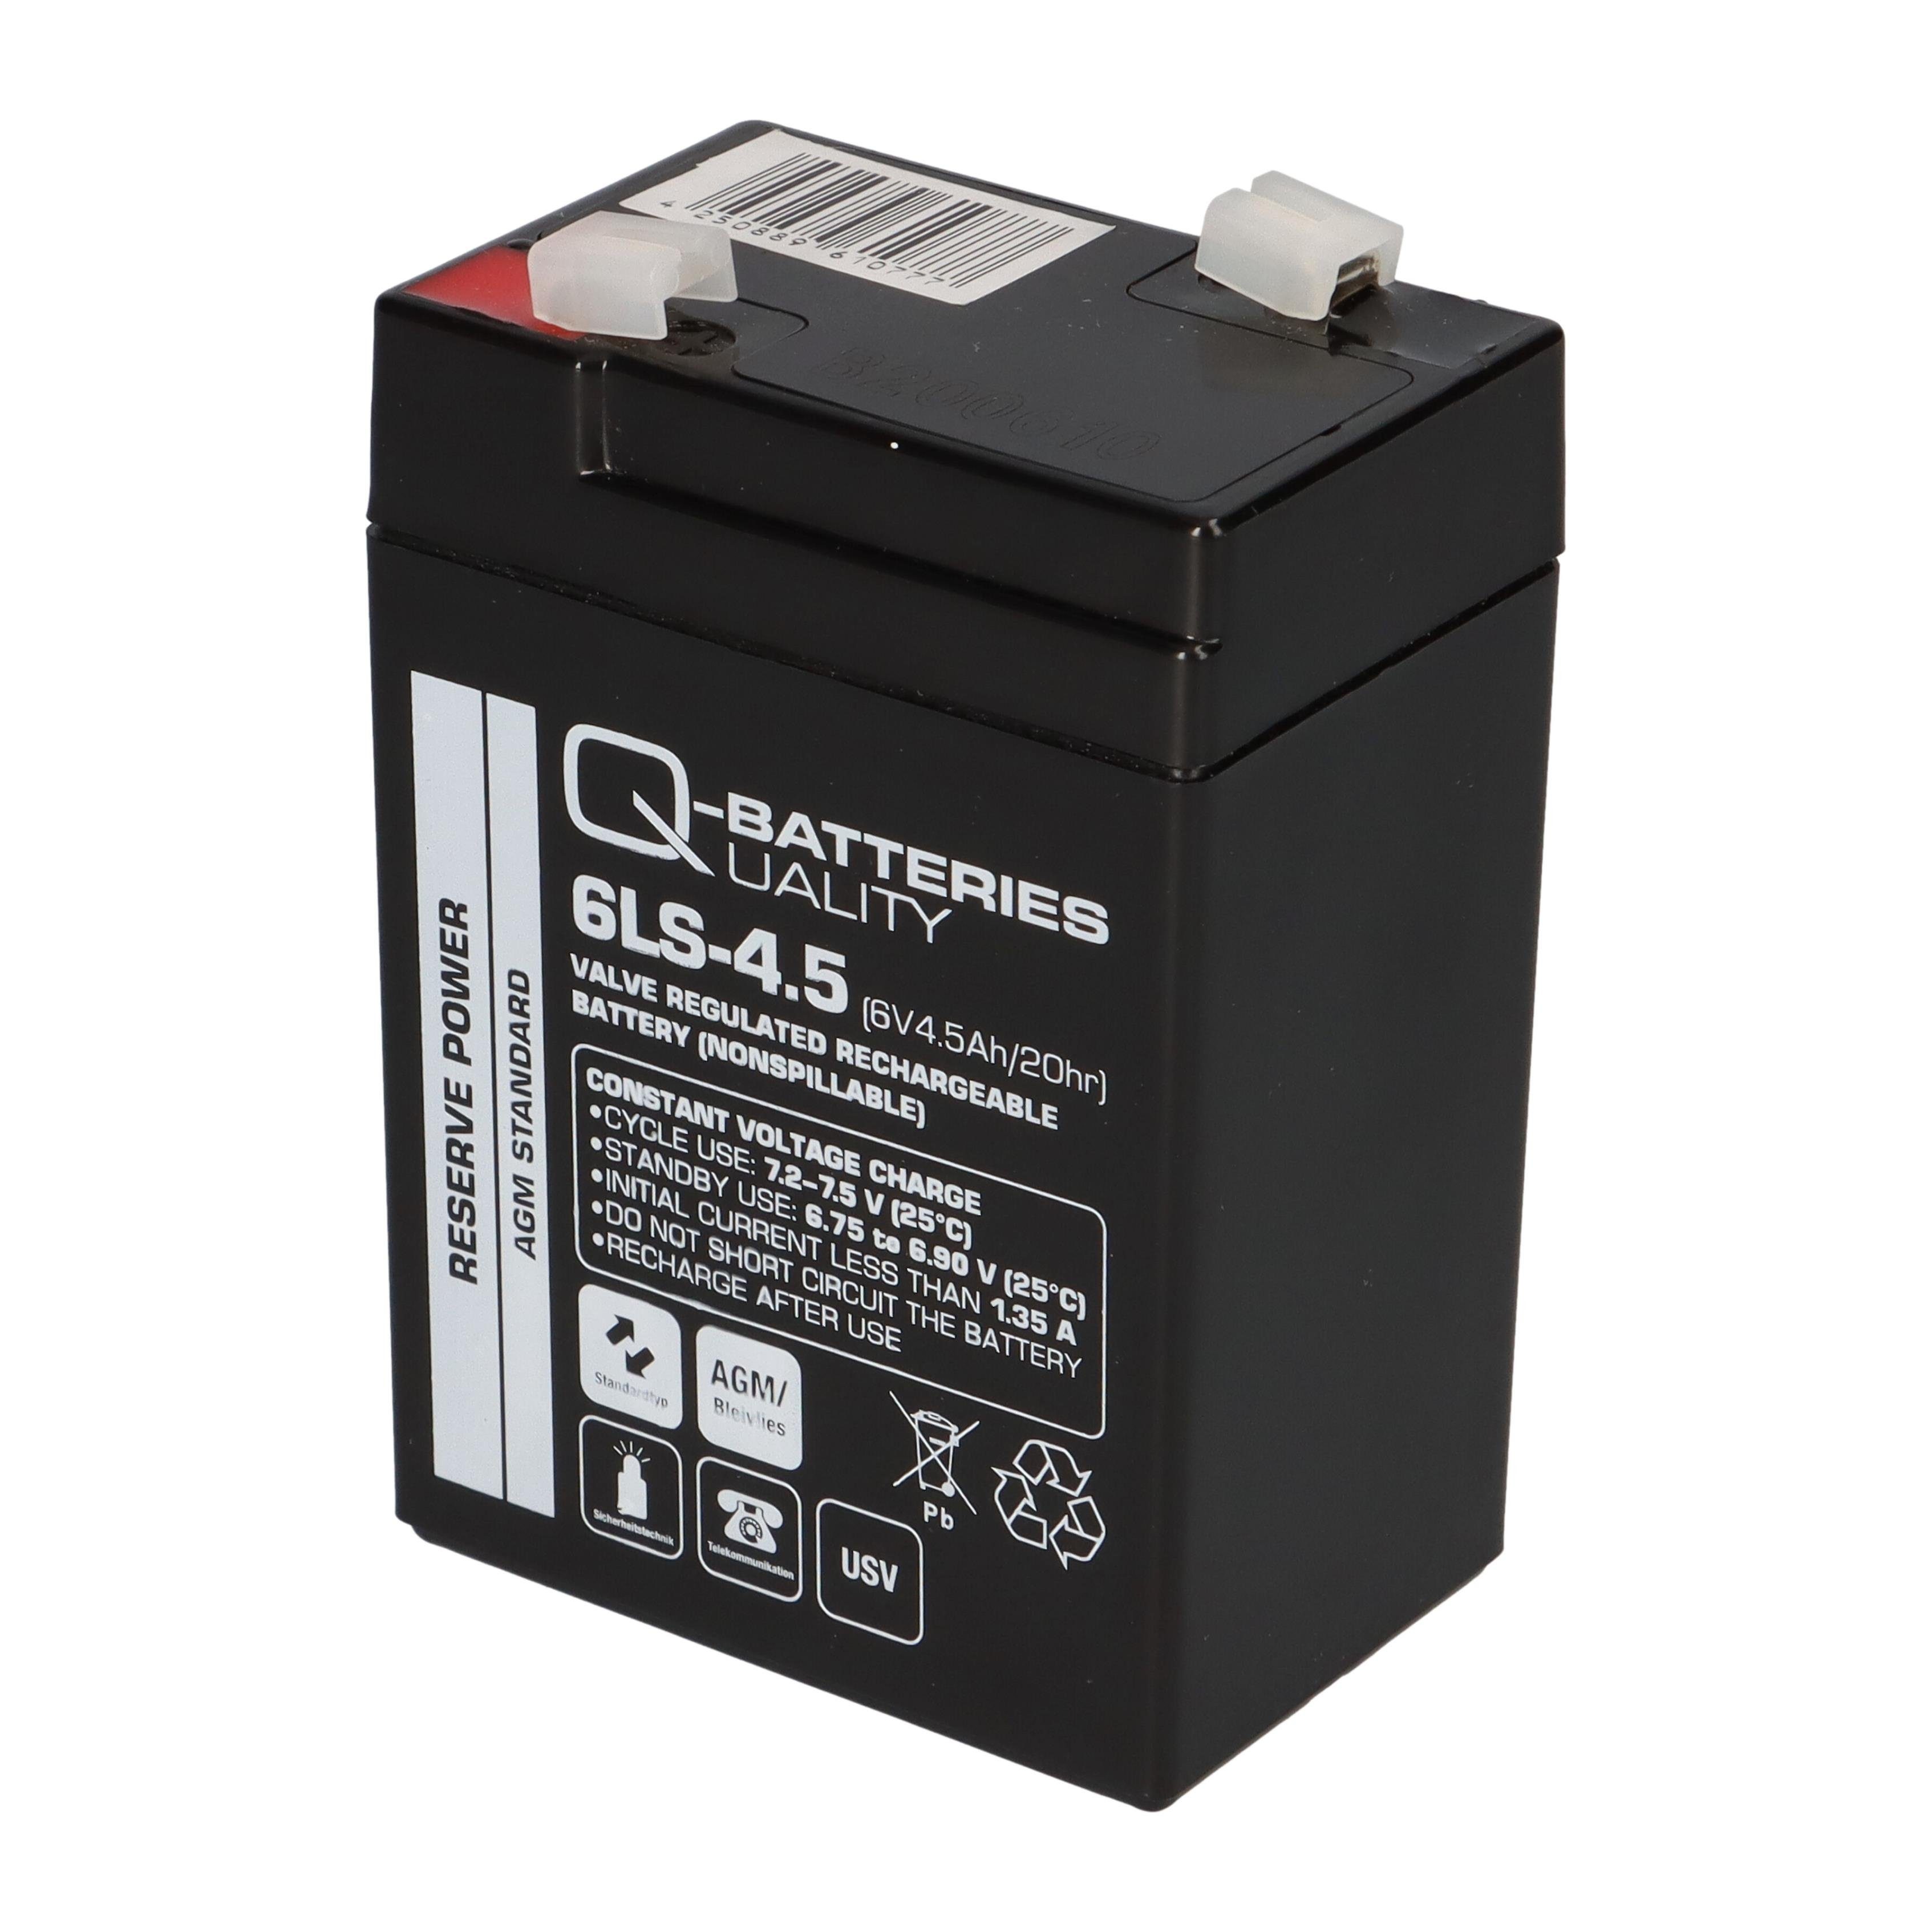 Blei-V Q-Batteries 6LS-4.5 Q-Batteries Ladegerät BL Akku Set Blei + 6V Bleiakkus 4,5Ah 6-0,6